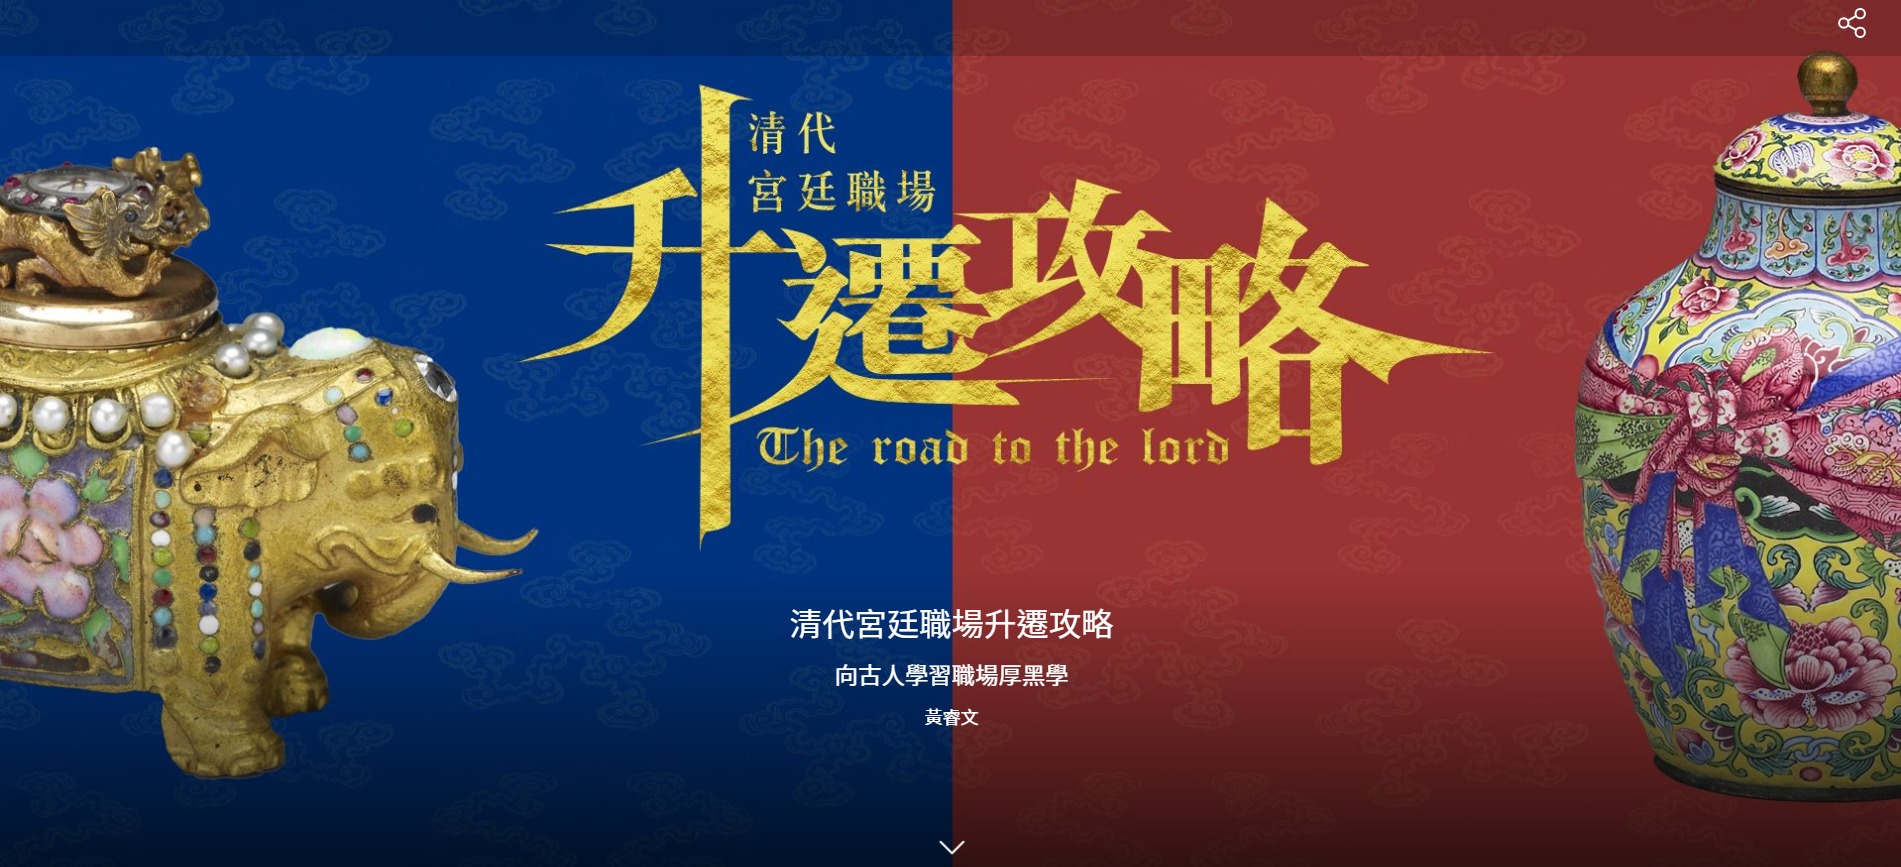 OMO Integrated Marketing Case: Online Digital Exhibition of the Forbidden City